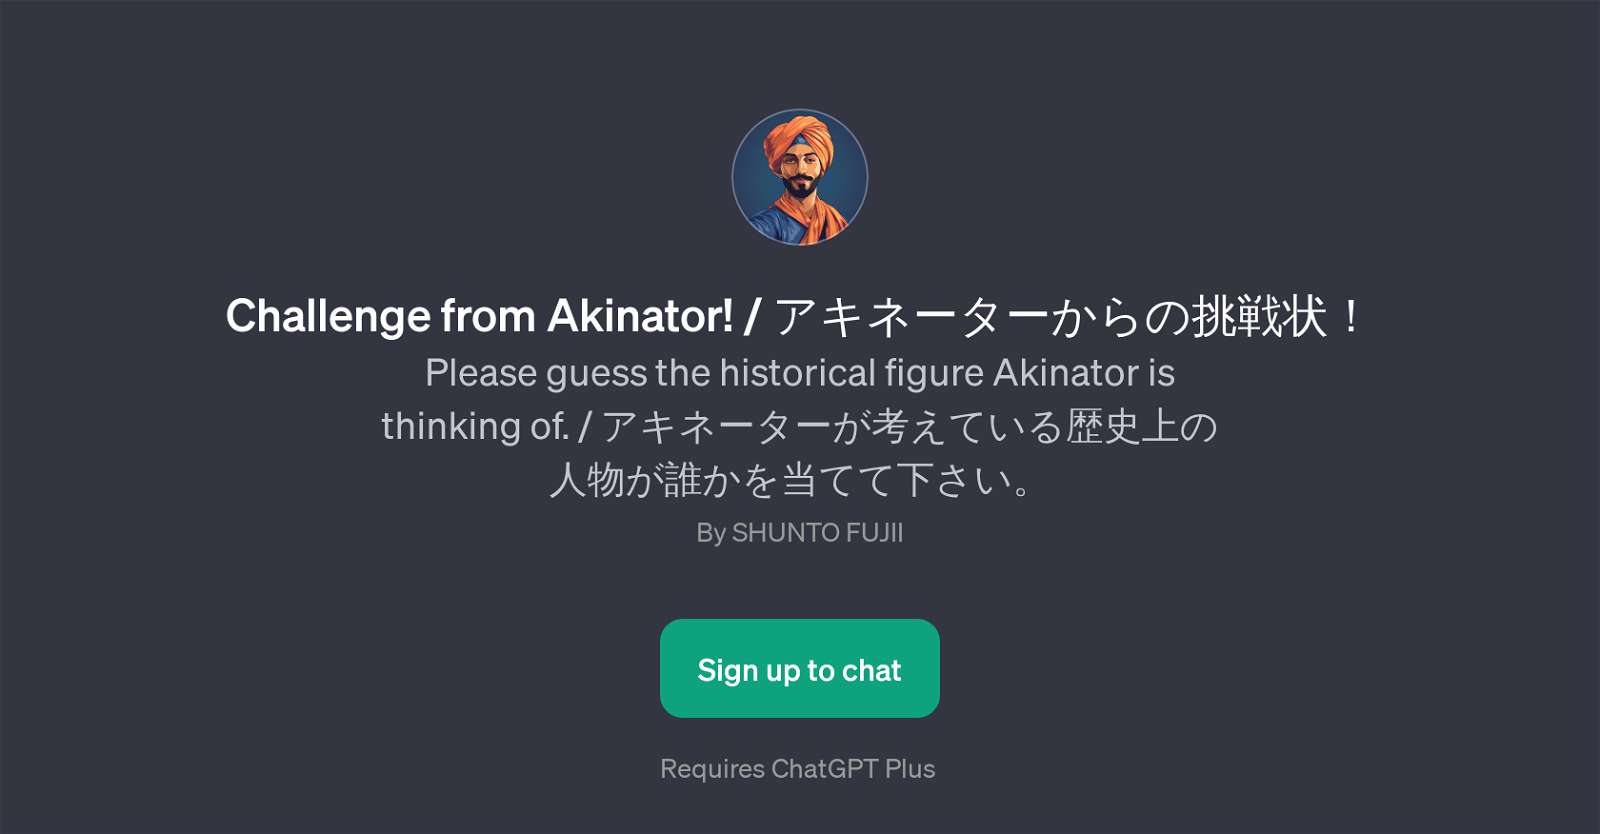 Challenge from Akinator website